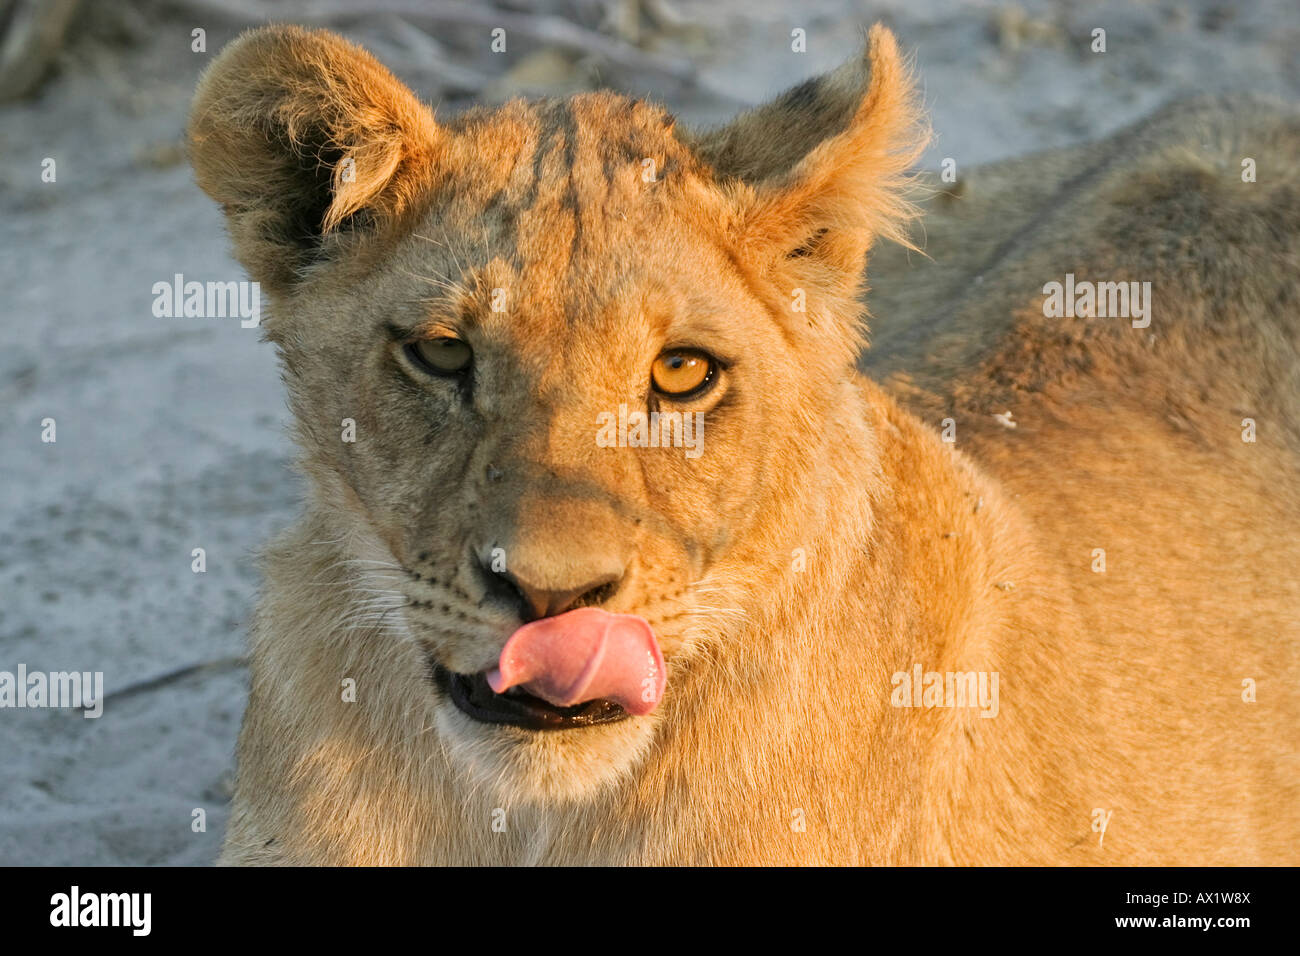 Young Lion cup (Panthera leo) è leccare i imbardata, Savuti, Chobe National Park, Botswana, Africa Foto Stock